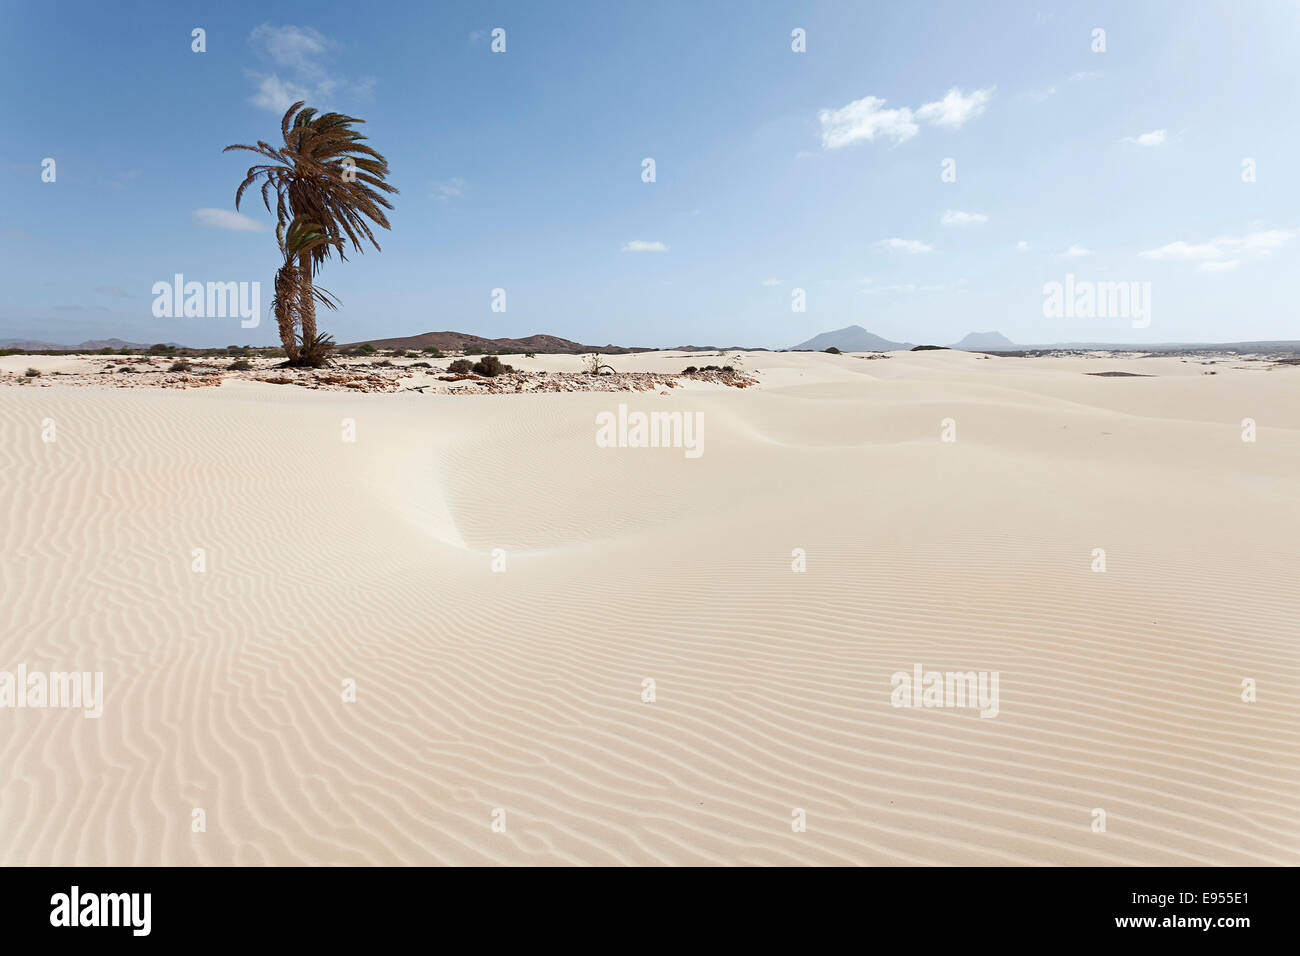 Solitary palm tree in the sand dunes of the desert Deserto Viana, island of Boa Vista, Cape Verde, Republic of Cabo Verde Stock Photo